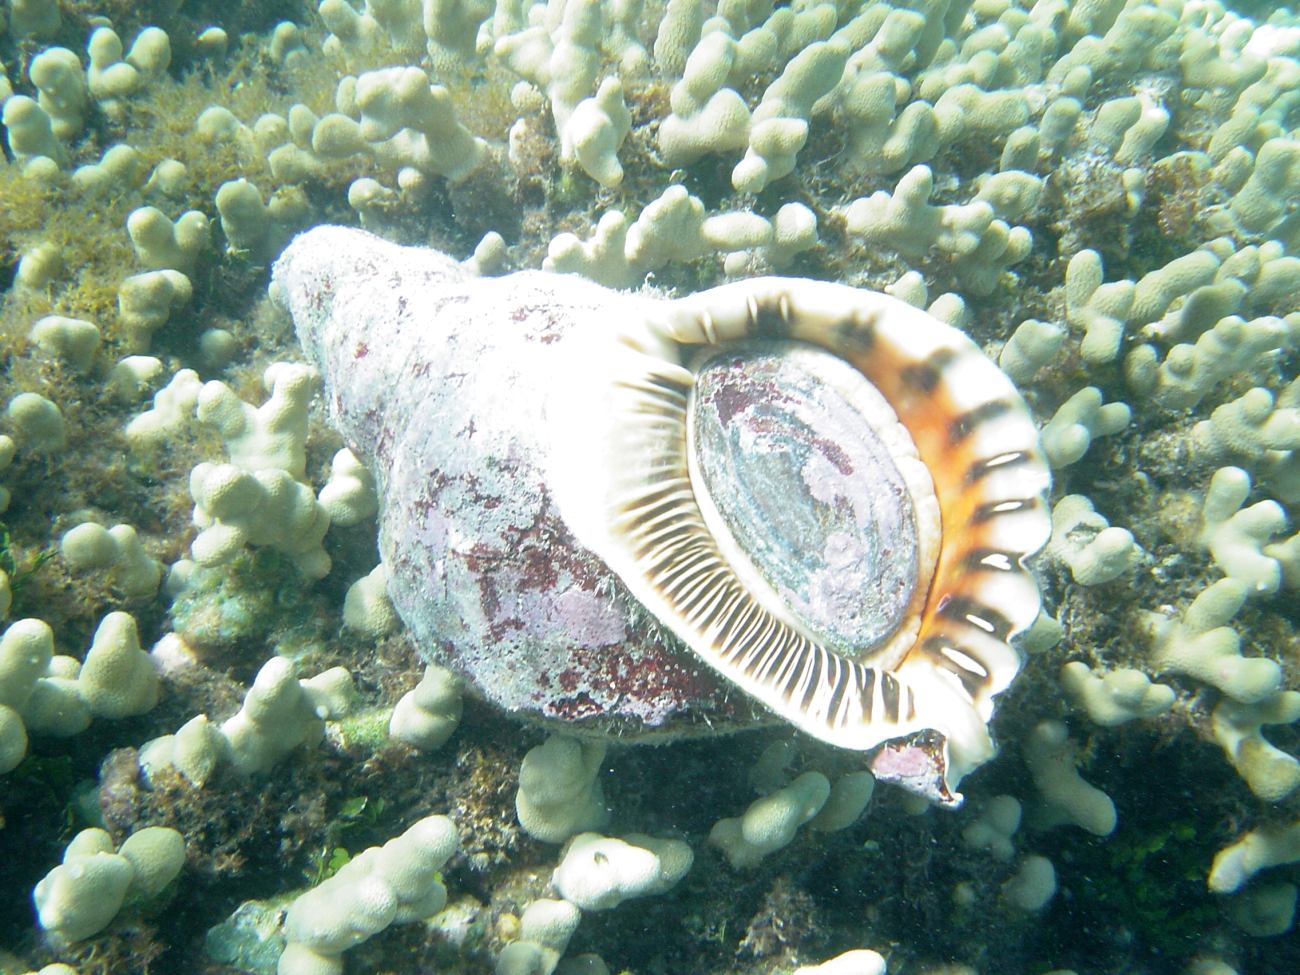 Pacific triton trumpet shell (Charonia tritonis) with living gastropod inside